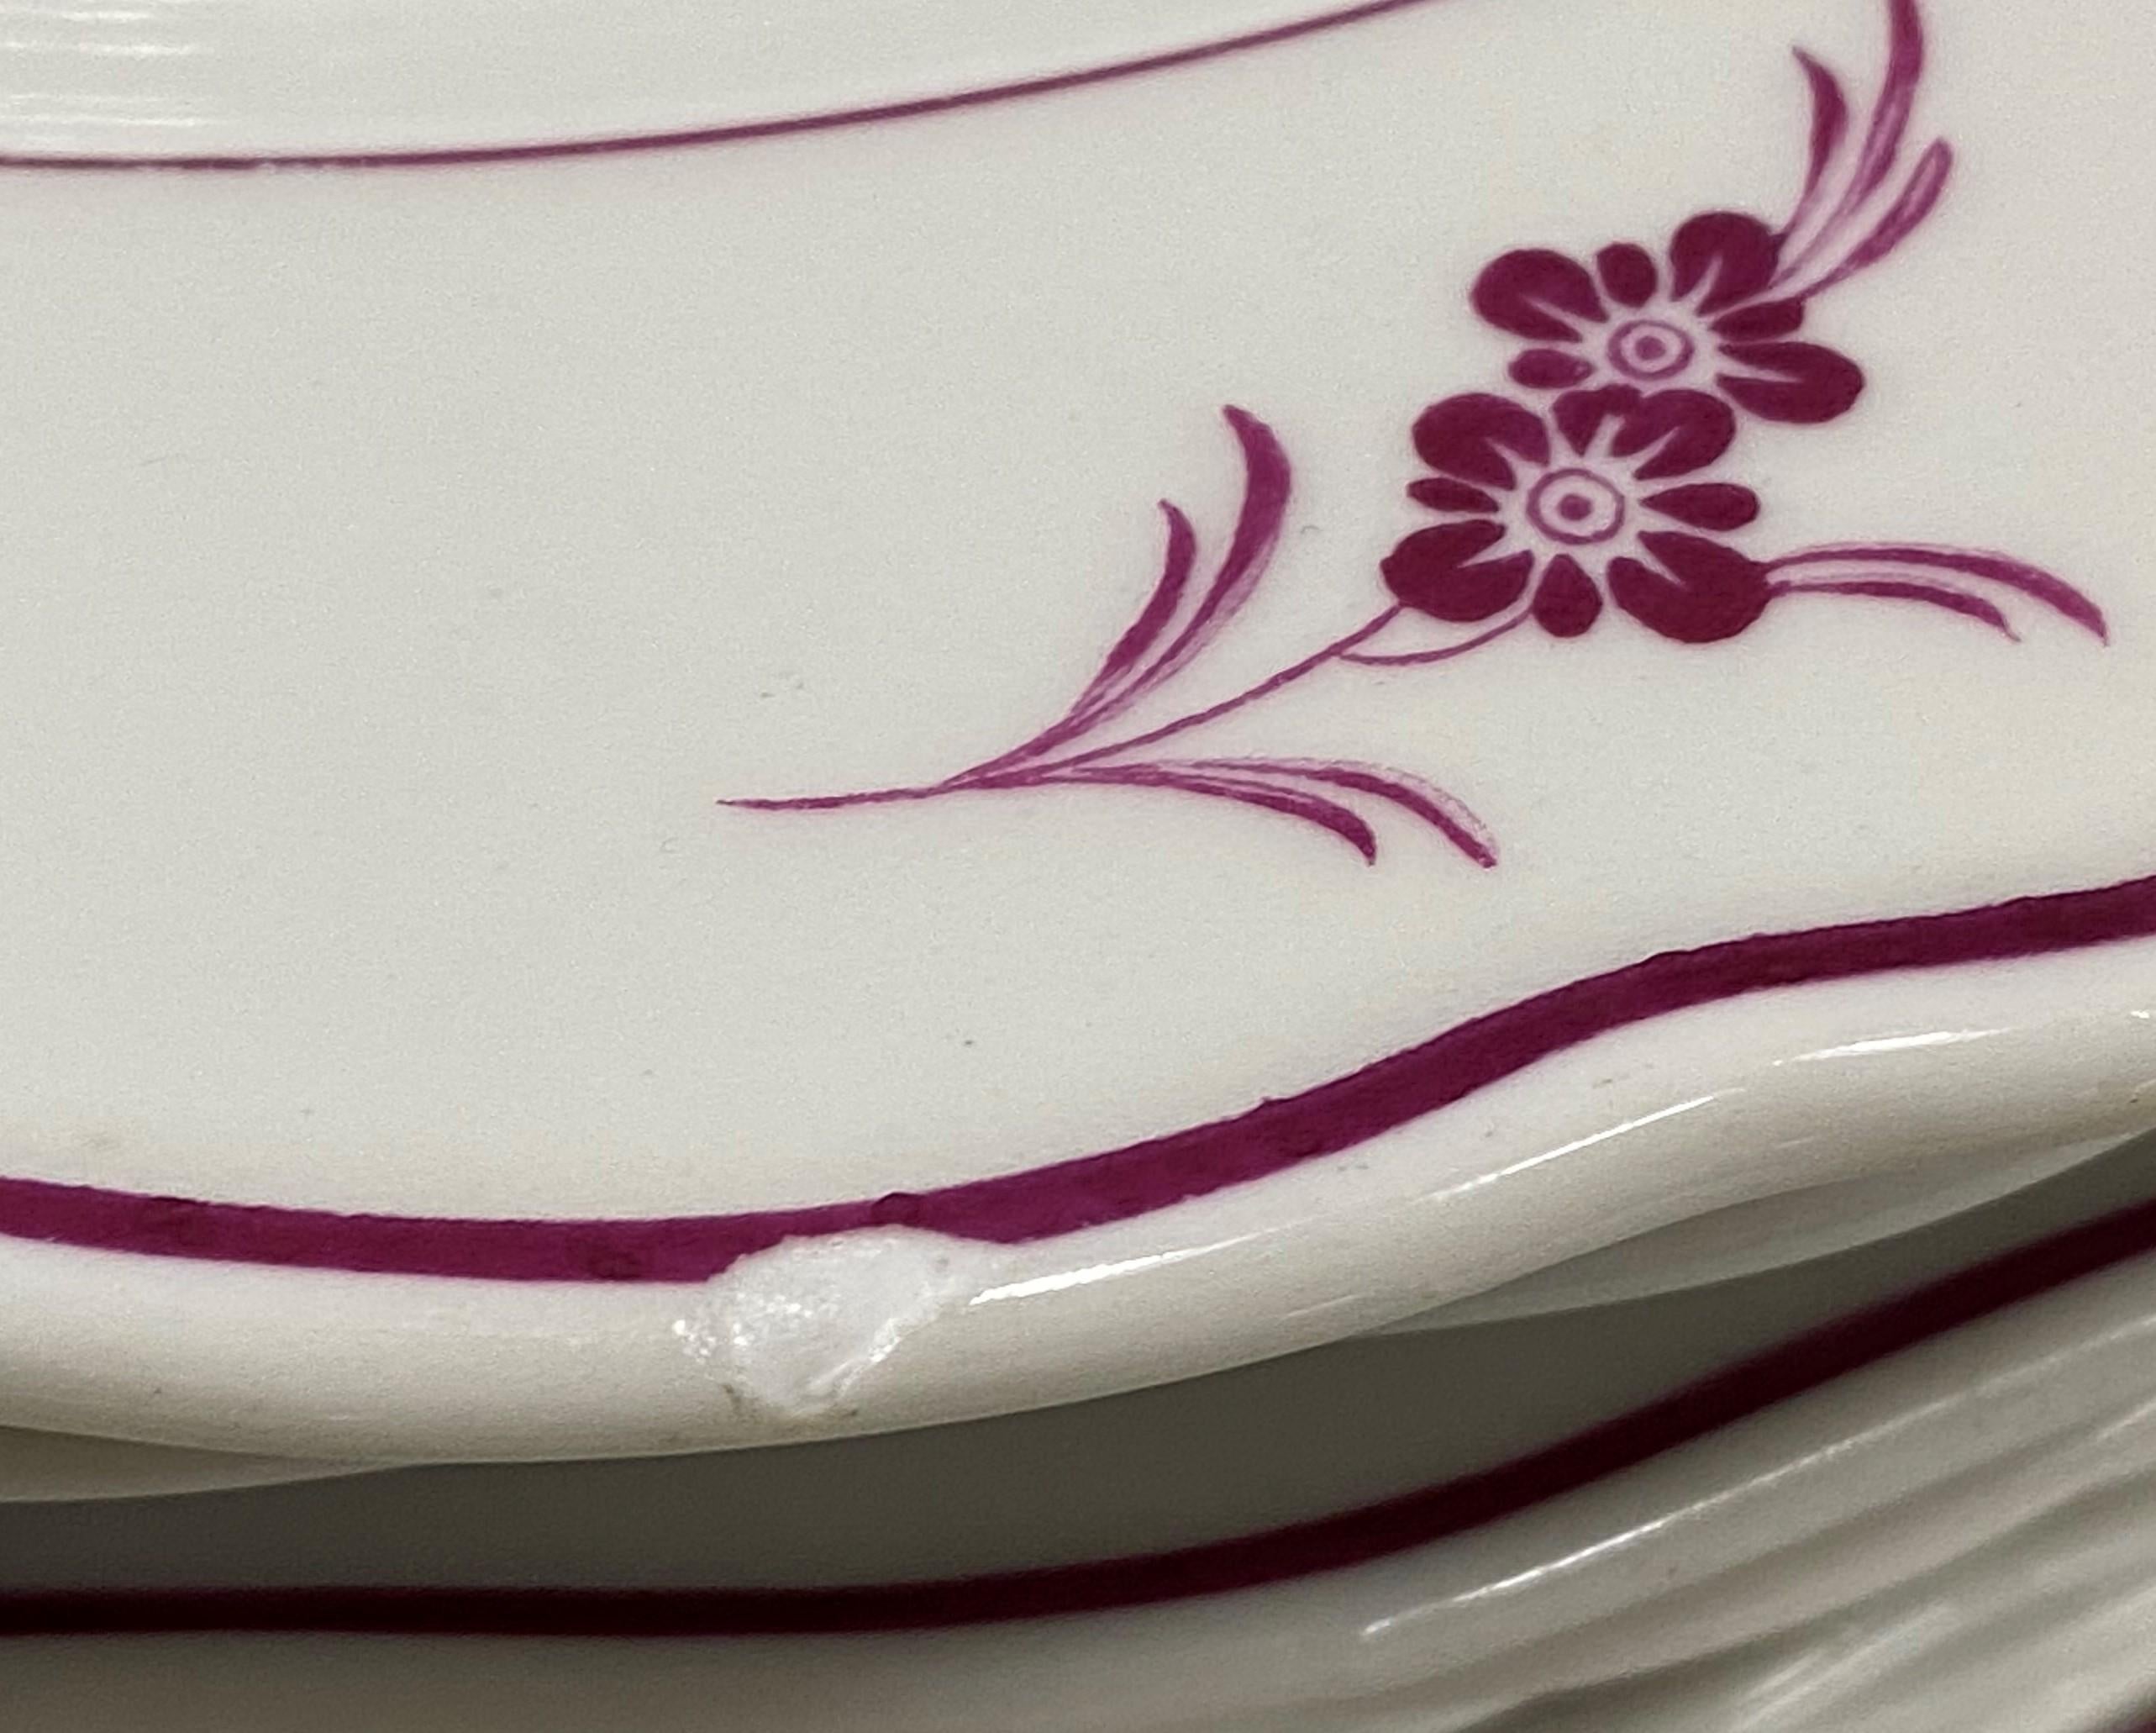 49-Piece Meissen Porcelain Dinner Service in Rare Puce/Purple Color For Sale 3